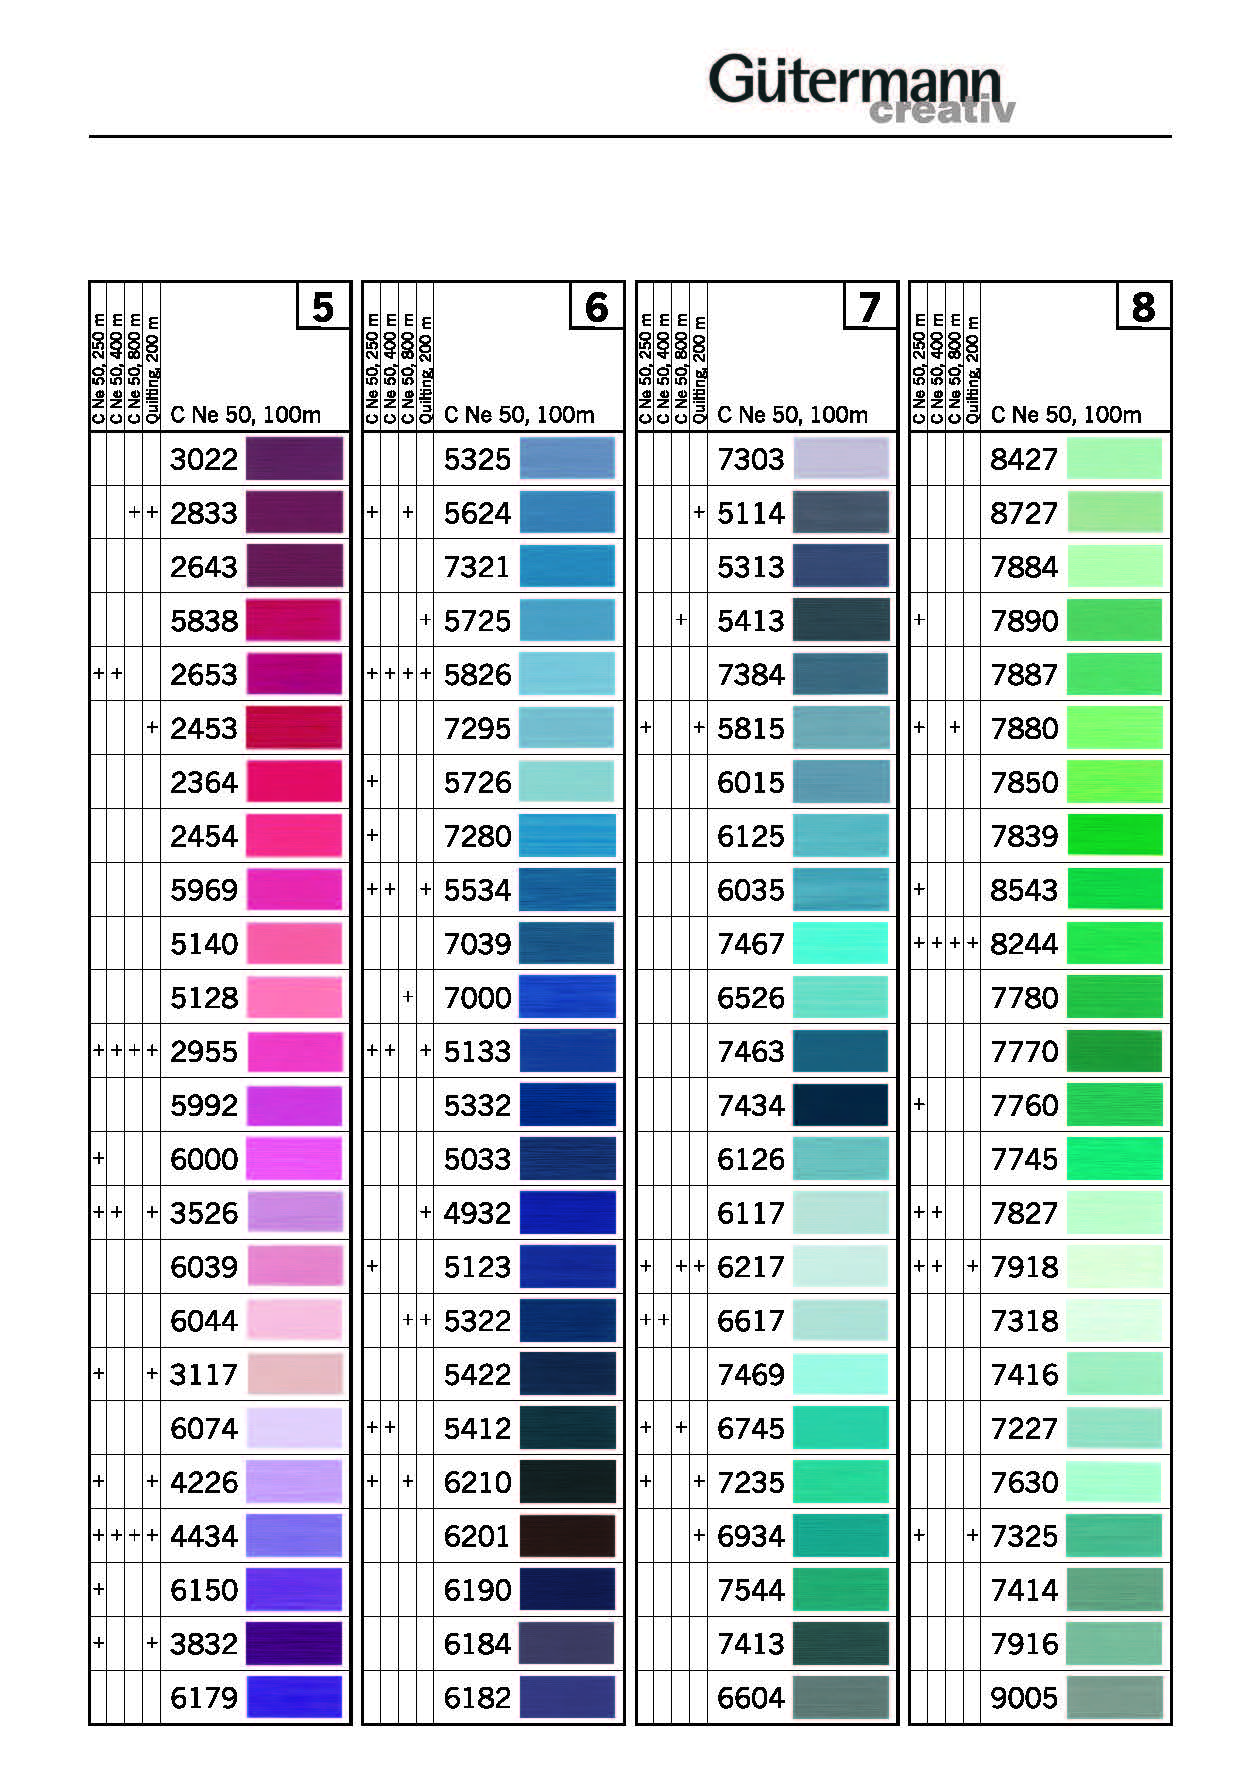 Gutermann Thread Color Chart For Sale - Gutermann Sewing Thread Buy Guterma...